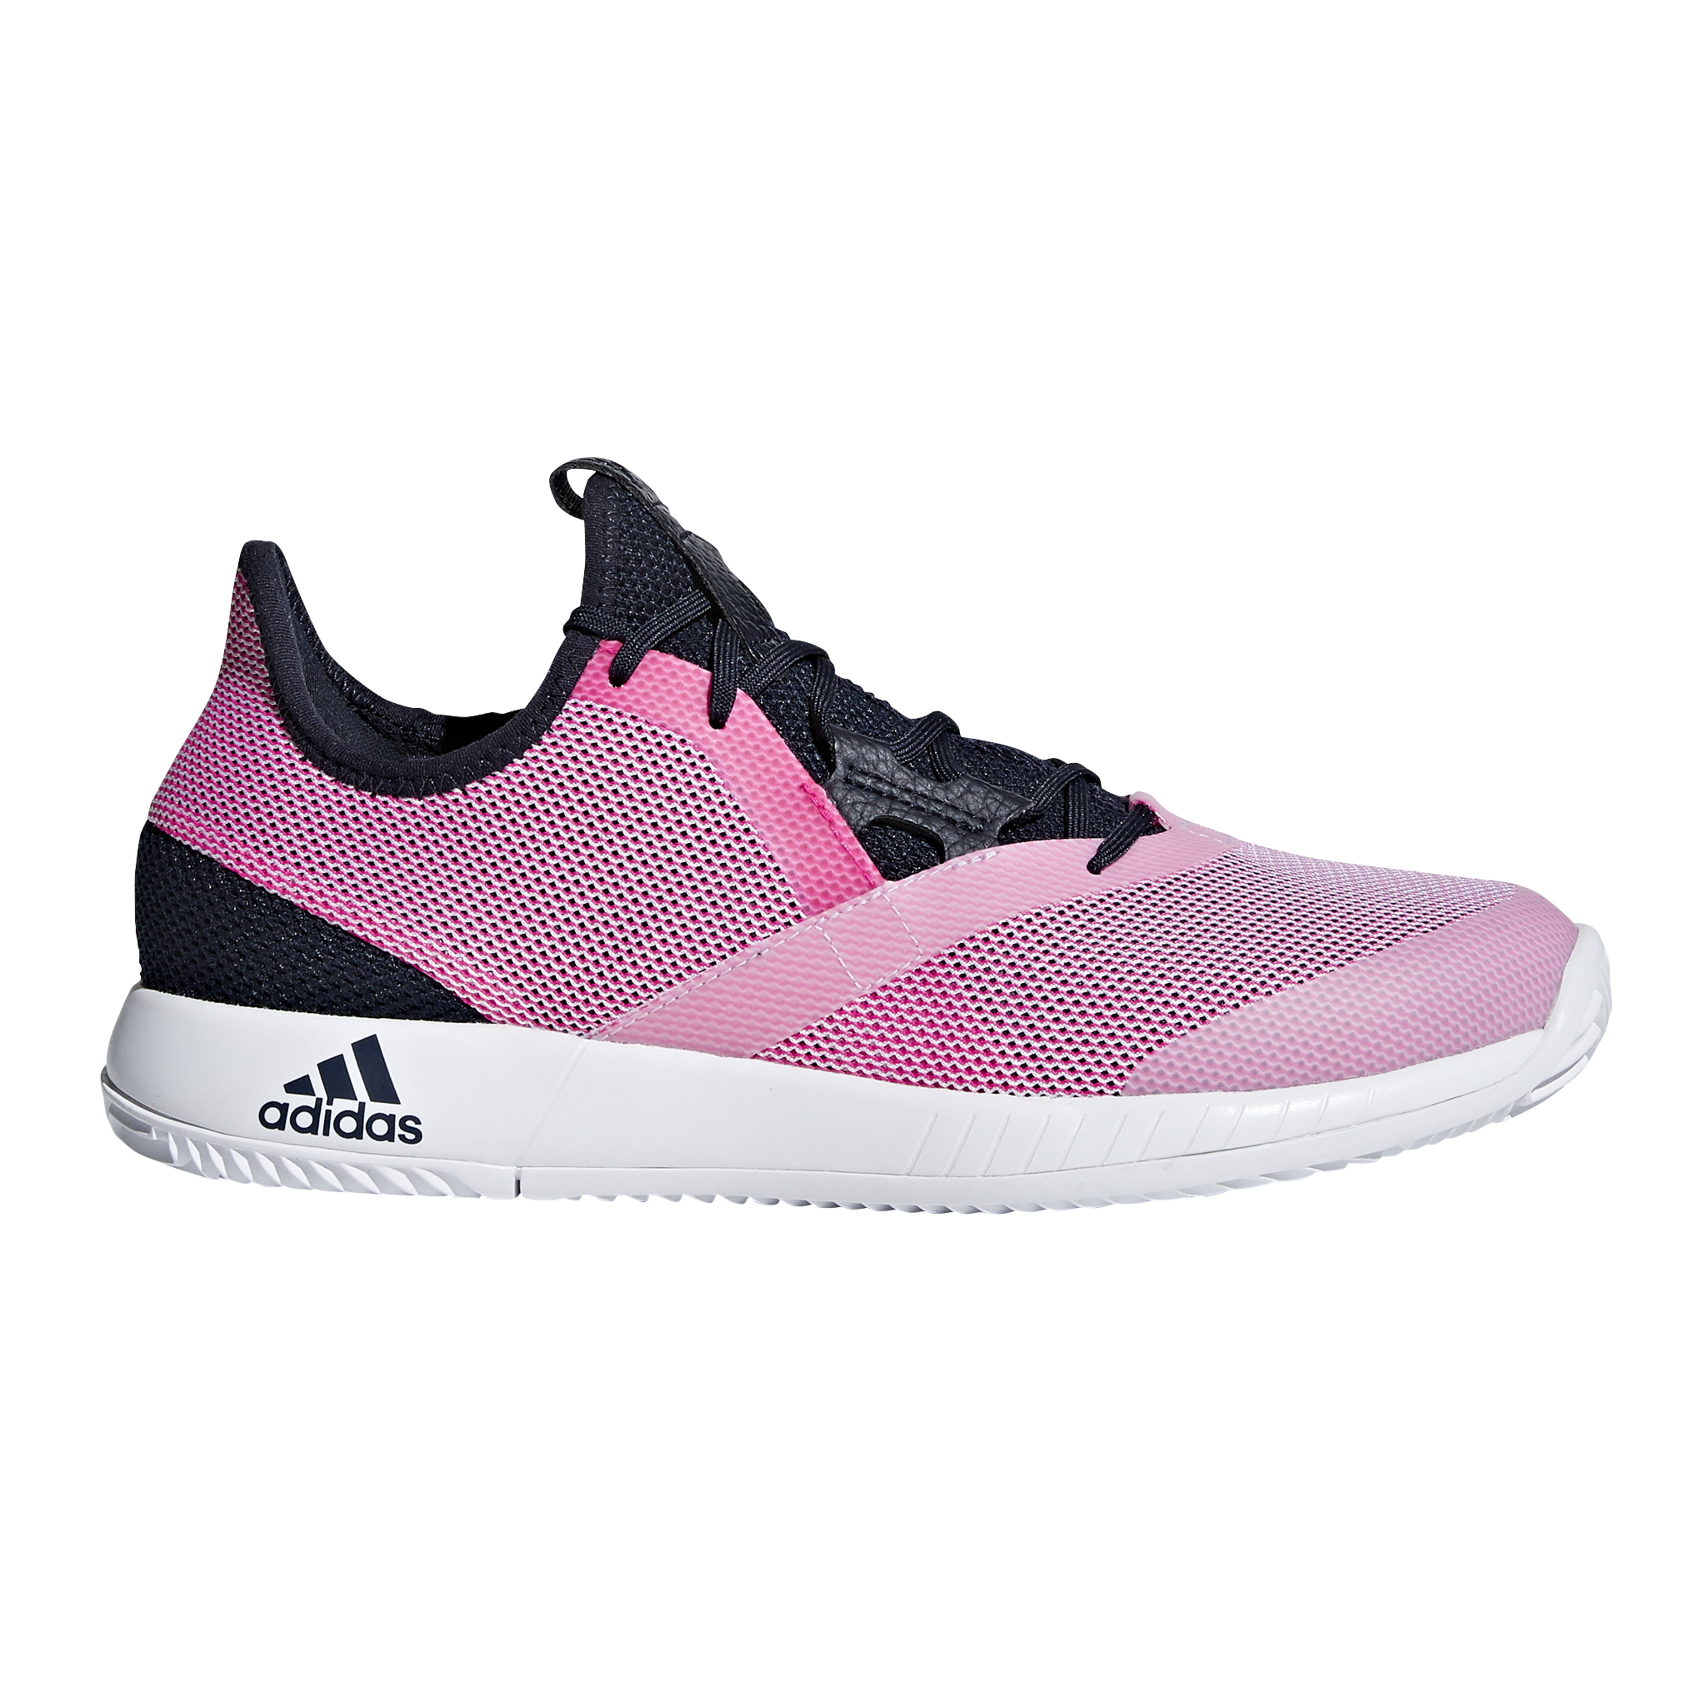 adidas adizero bounce ladies tennis shoes